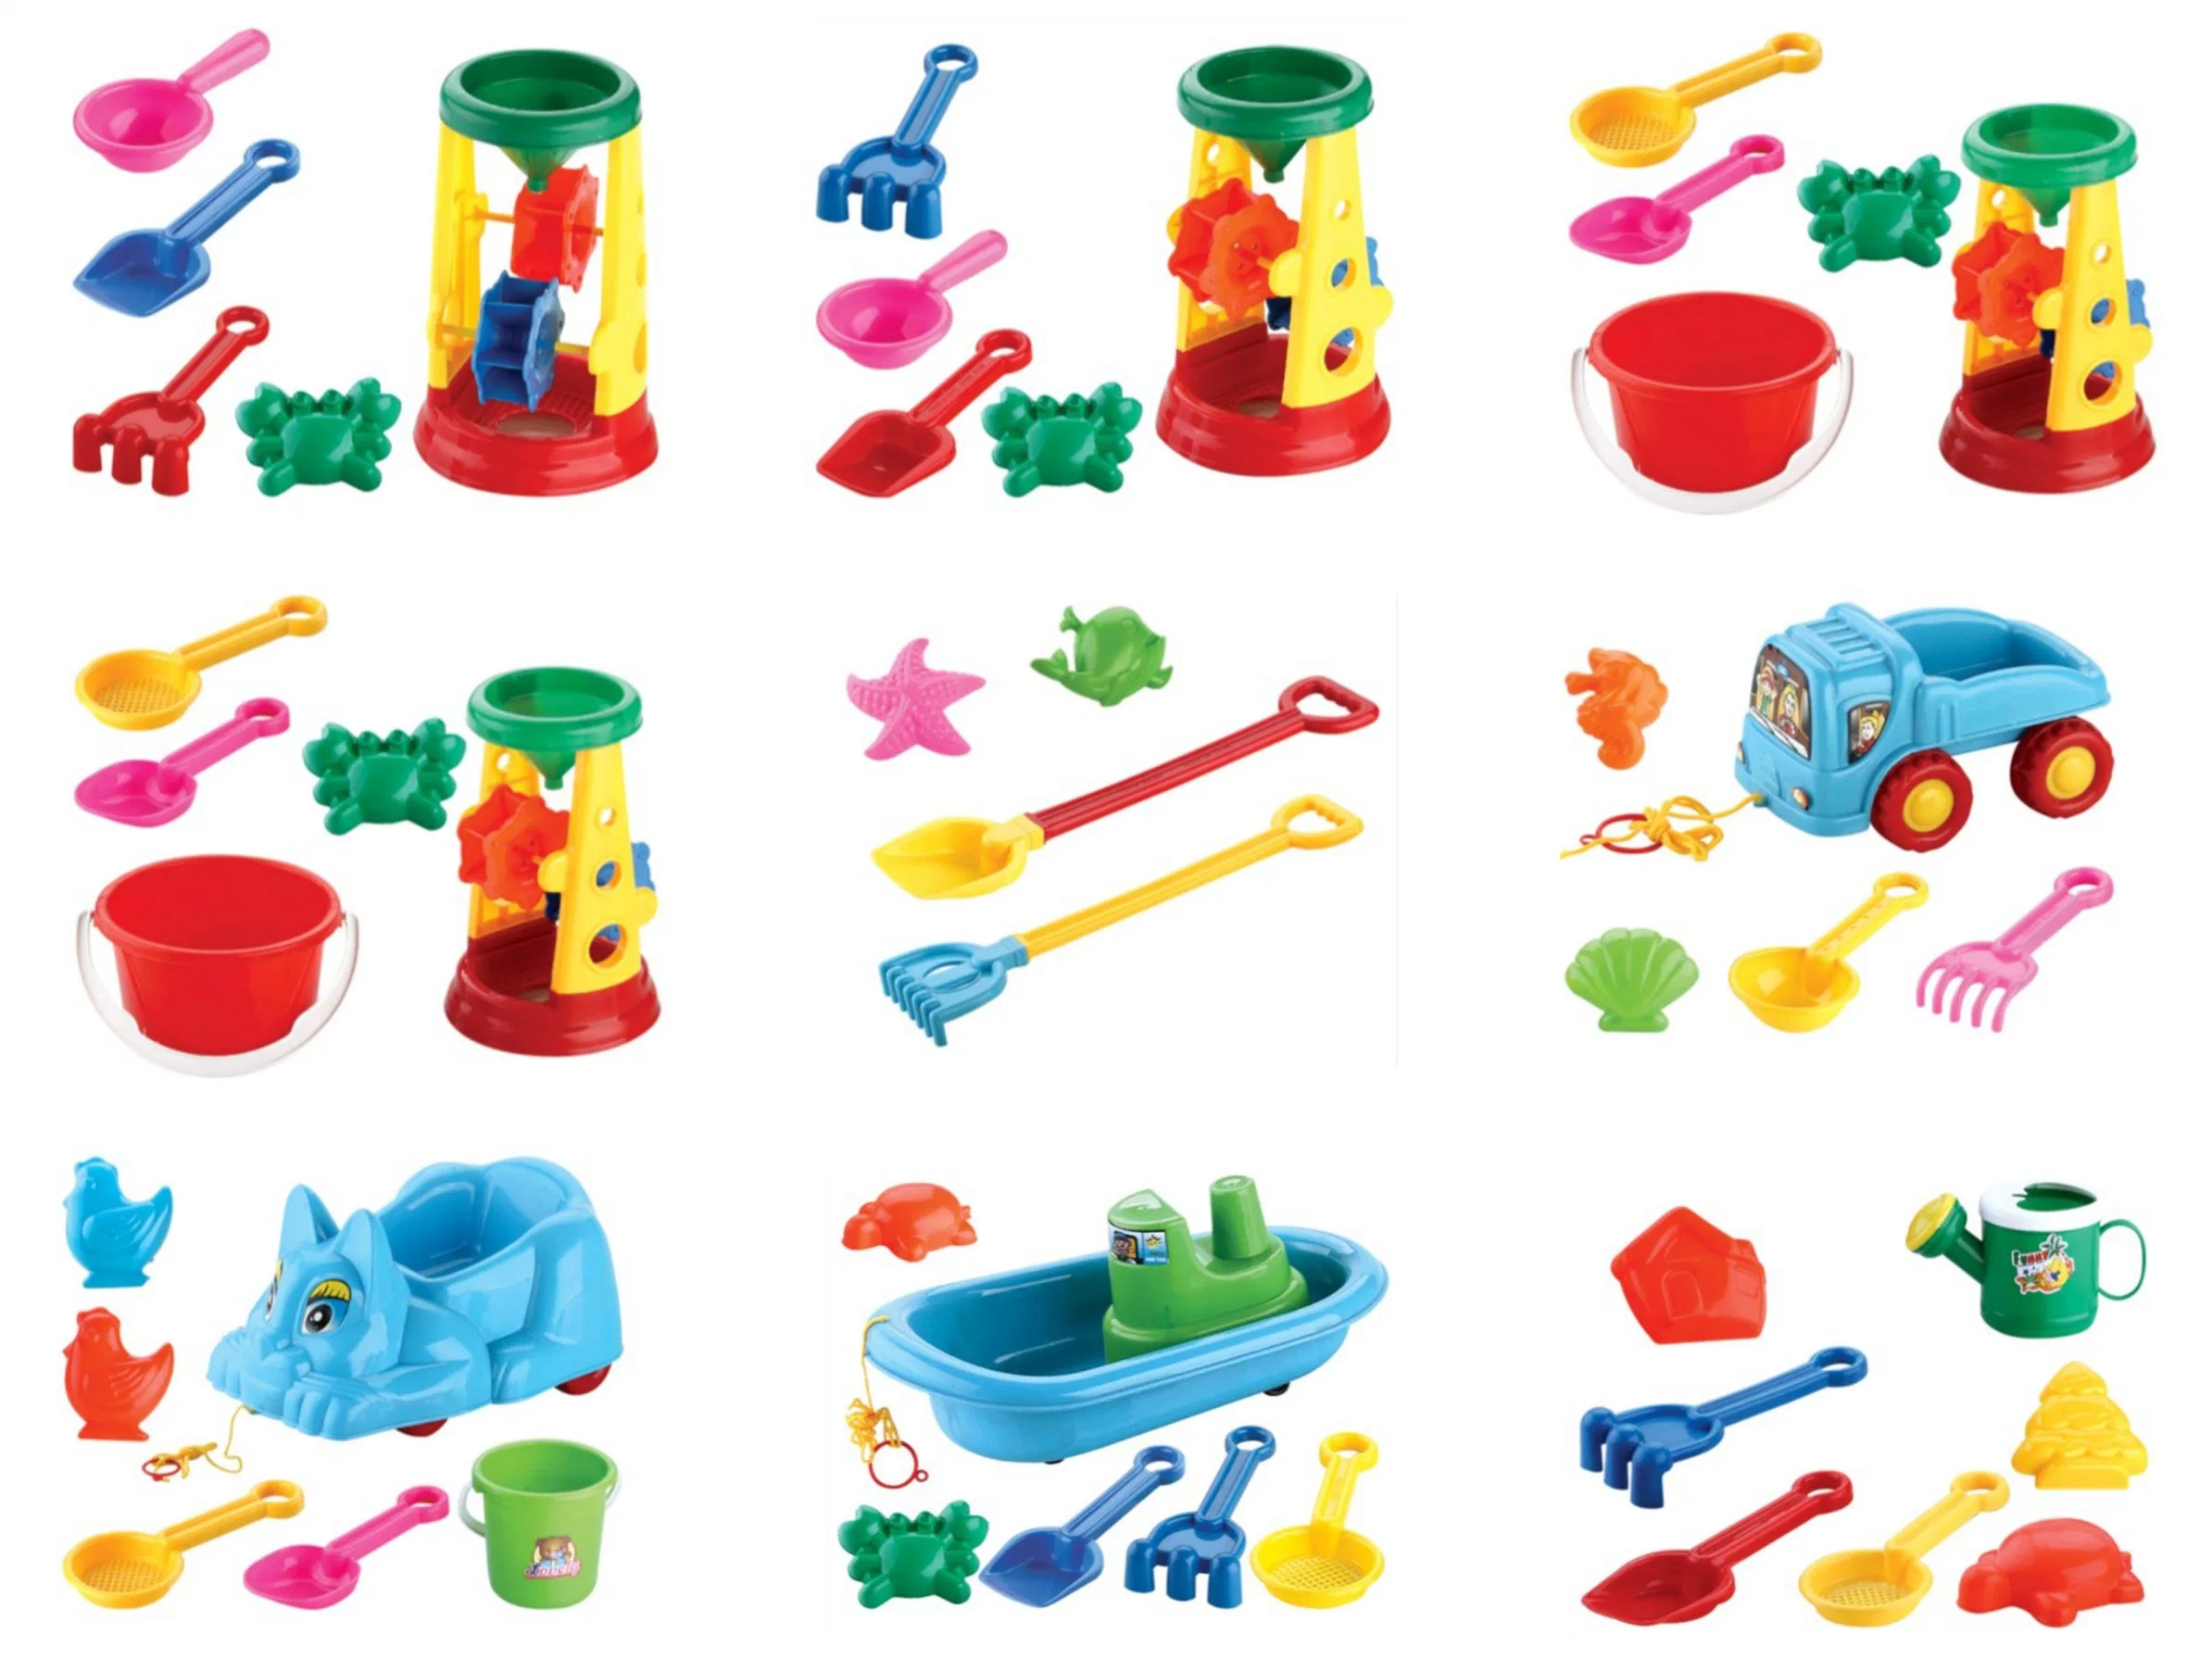 Drum 6PCS Musical Instrument OEM/ODM Factory Direct Sales Wholesale/Supplier Intellectual Educational Toys Kids Toy Educational Toys Children Plastic DIY